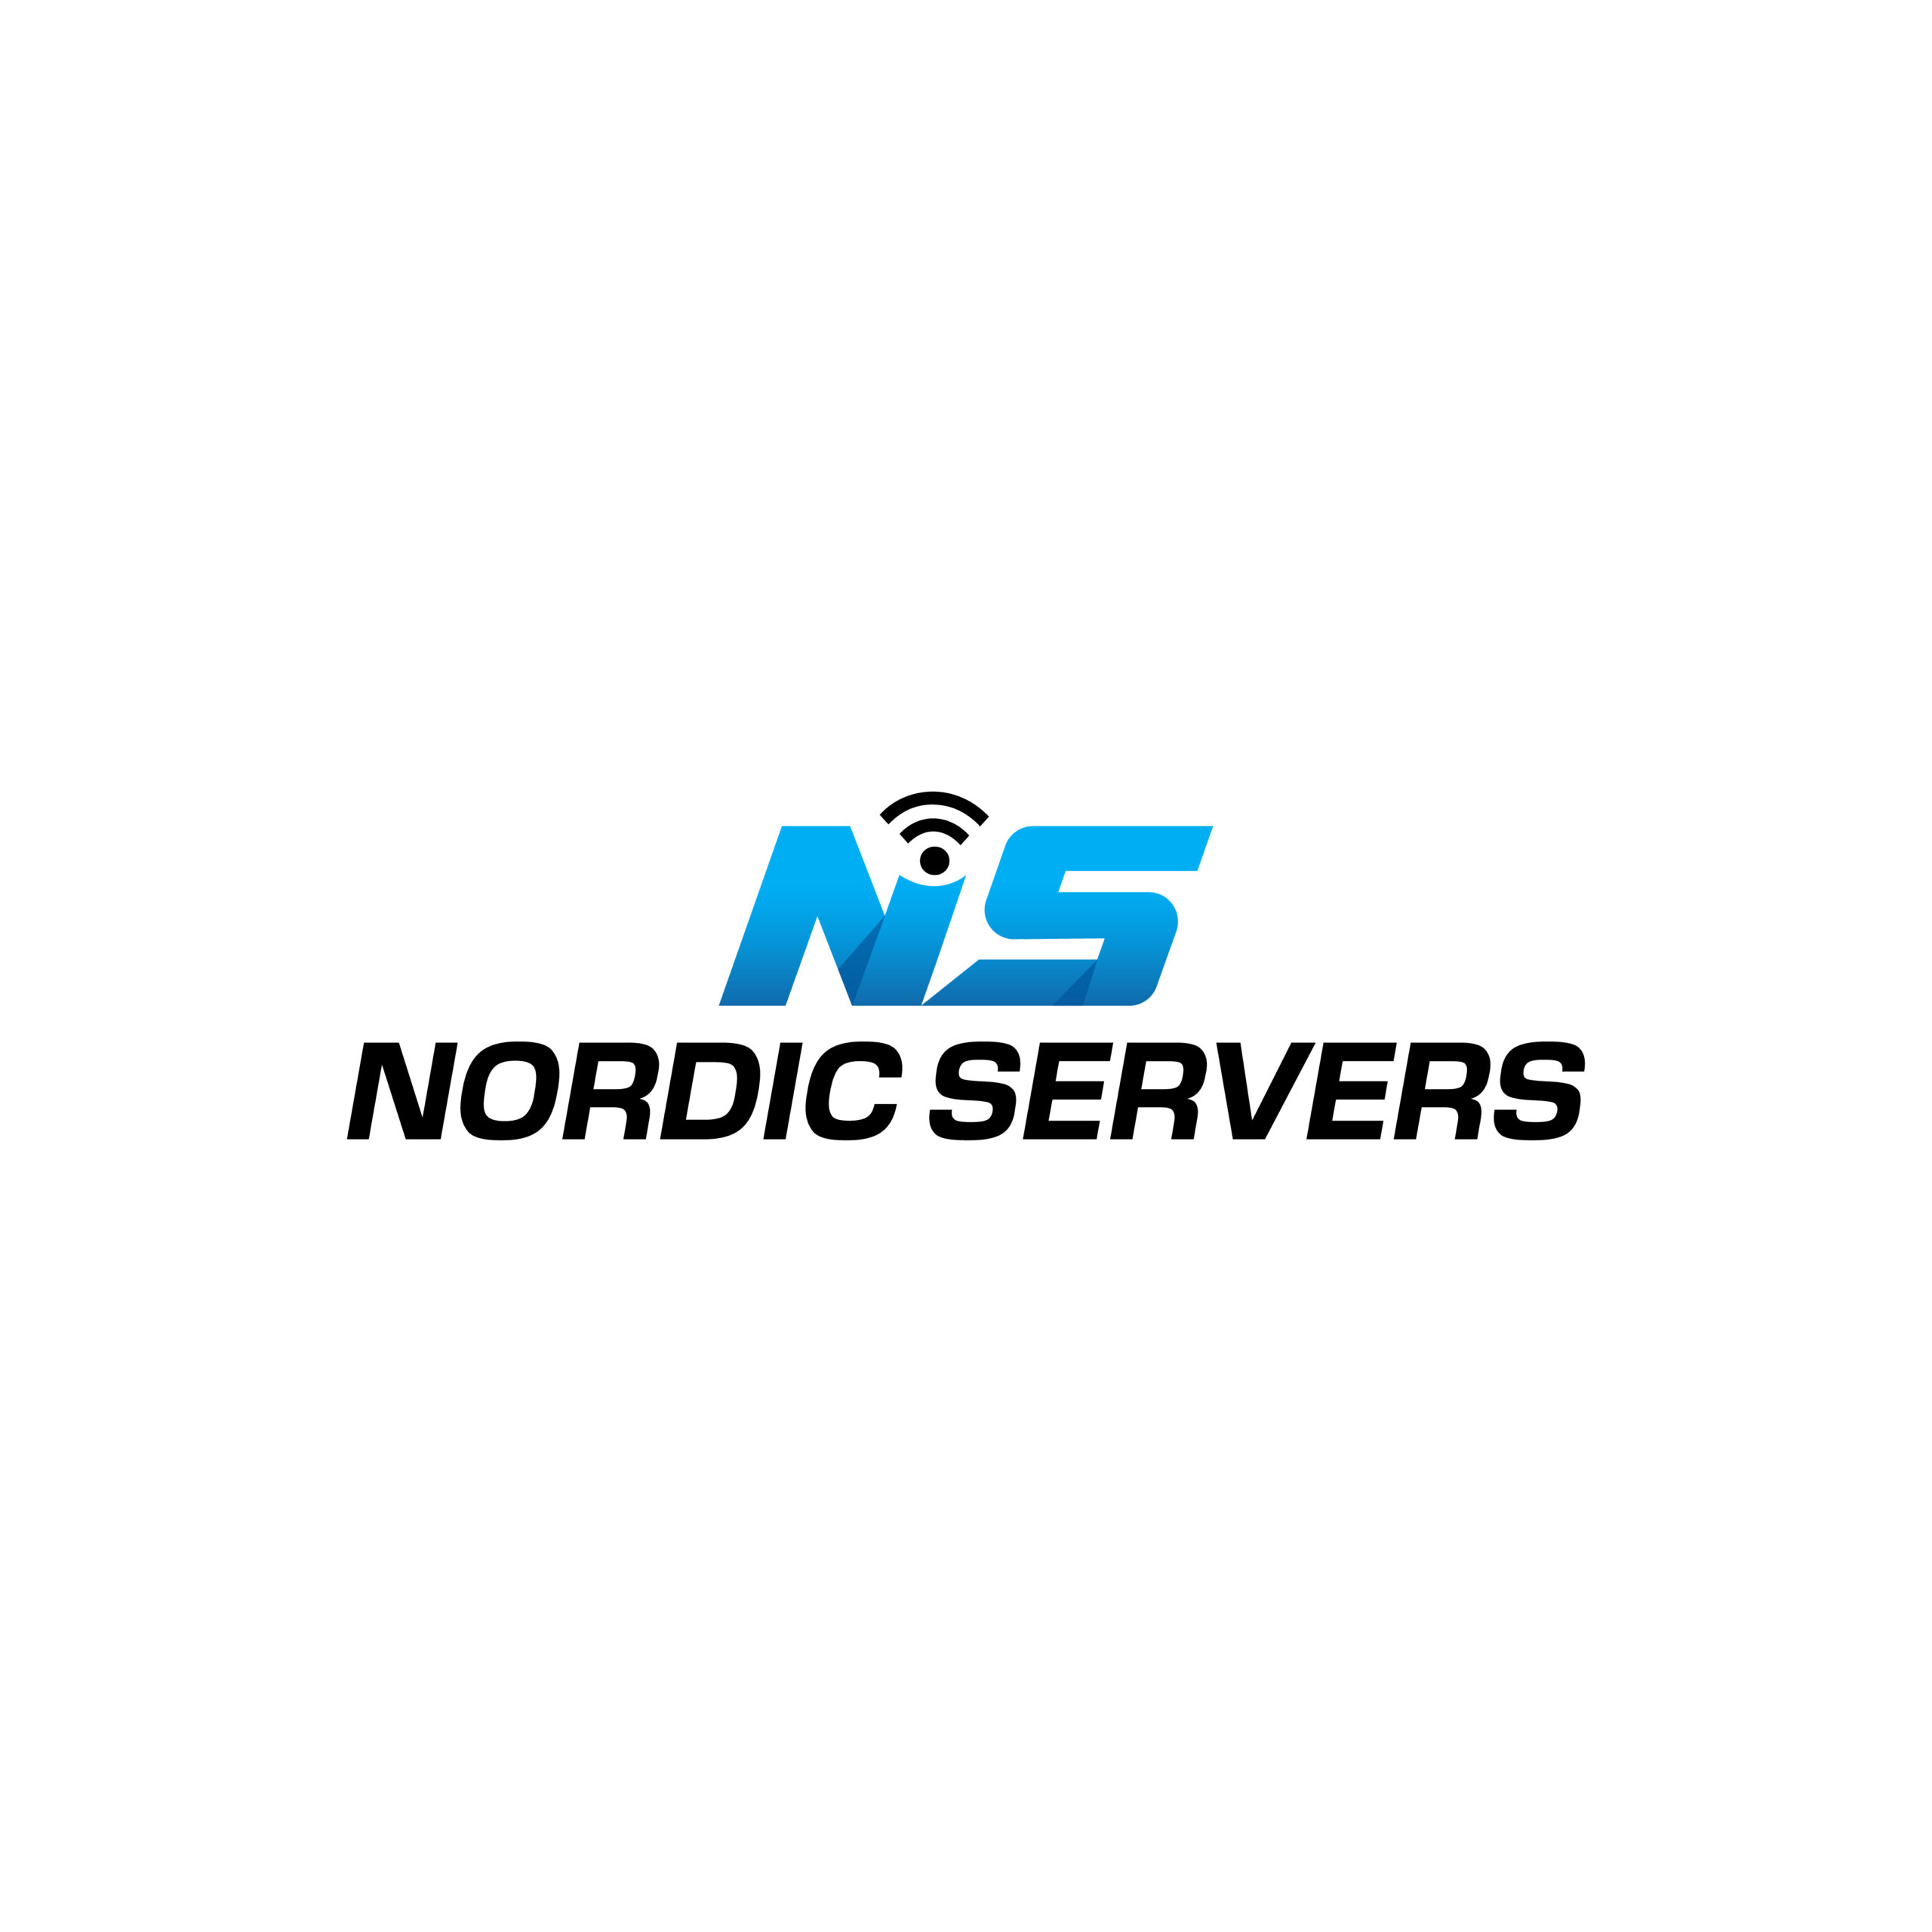 NS-logo-01